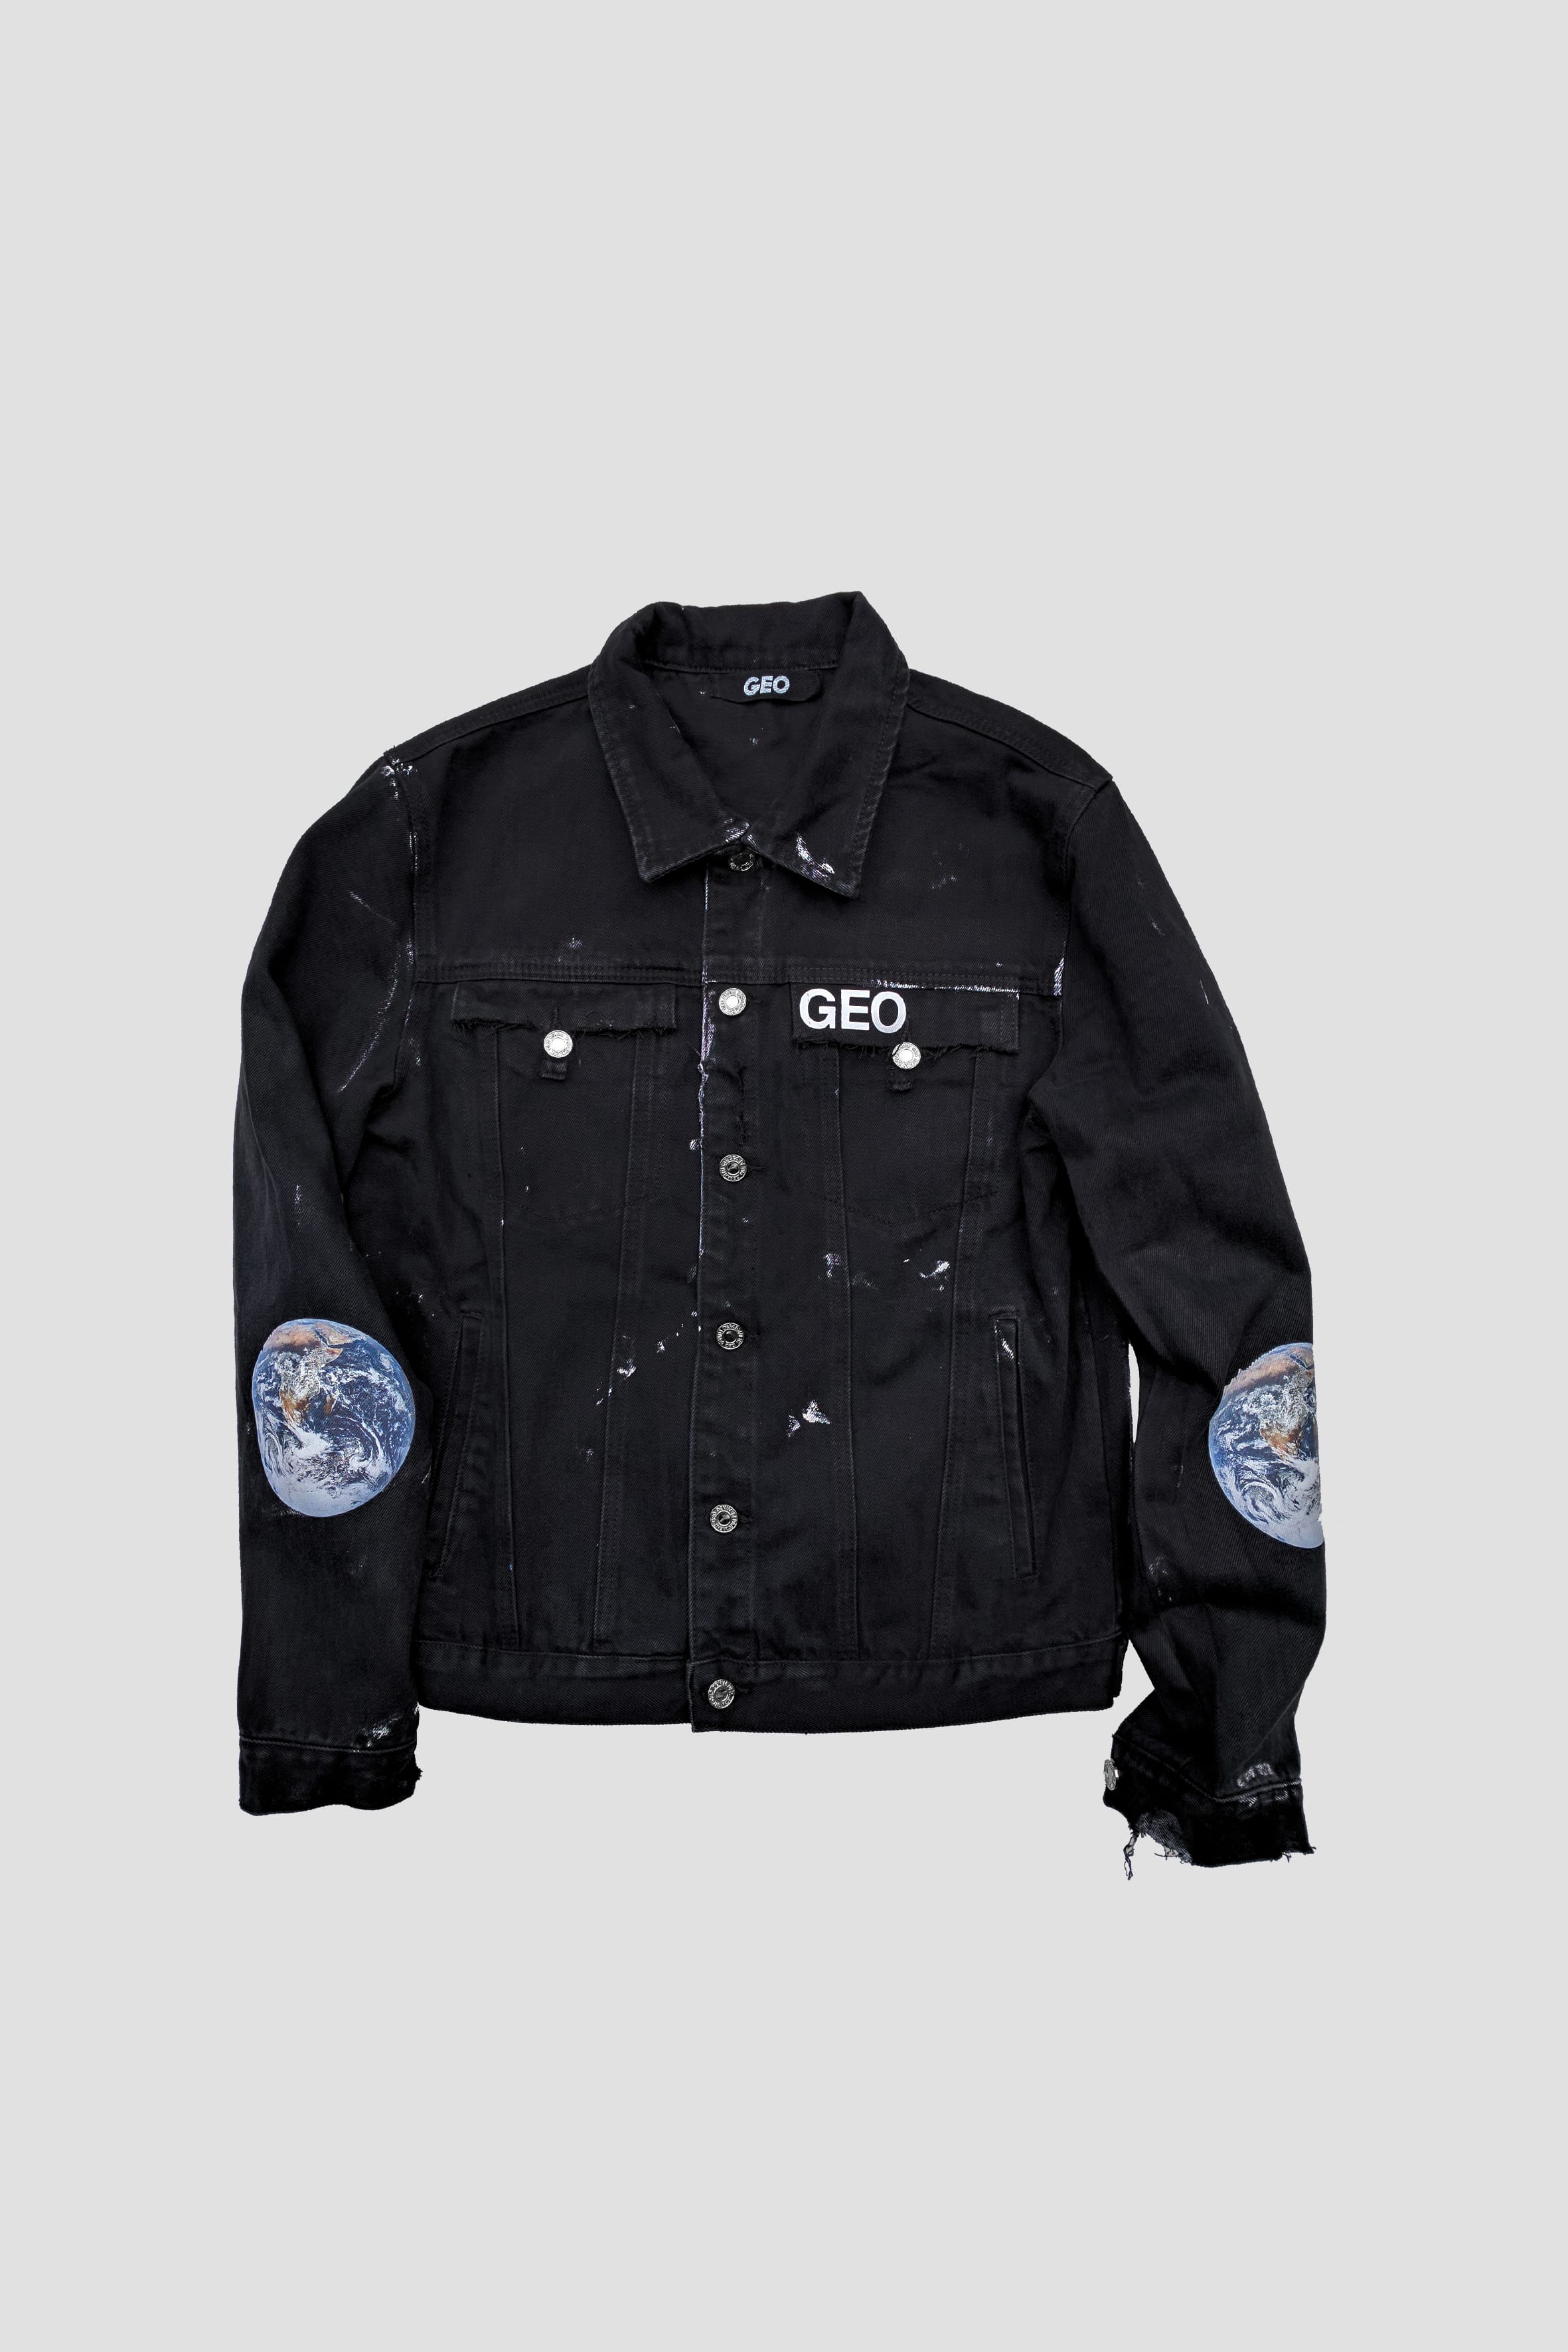 GEO Creates Unique Denim Jackets For IT Apparels | HYPEBEAST